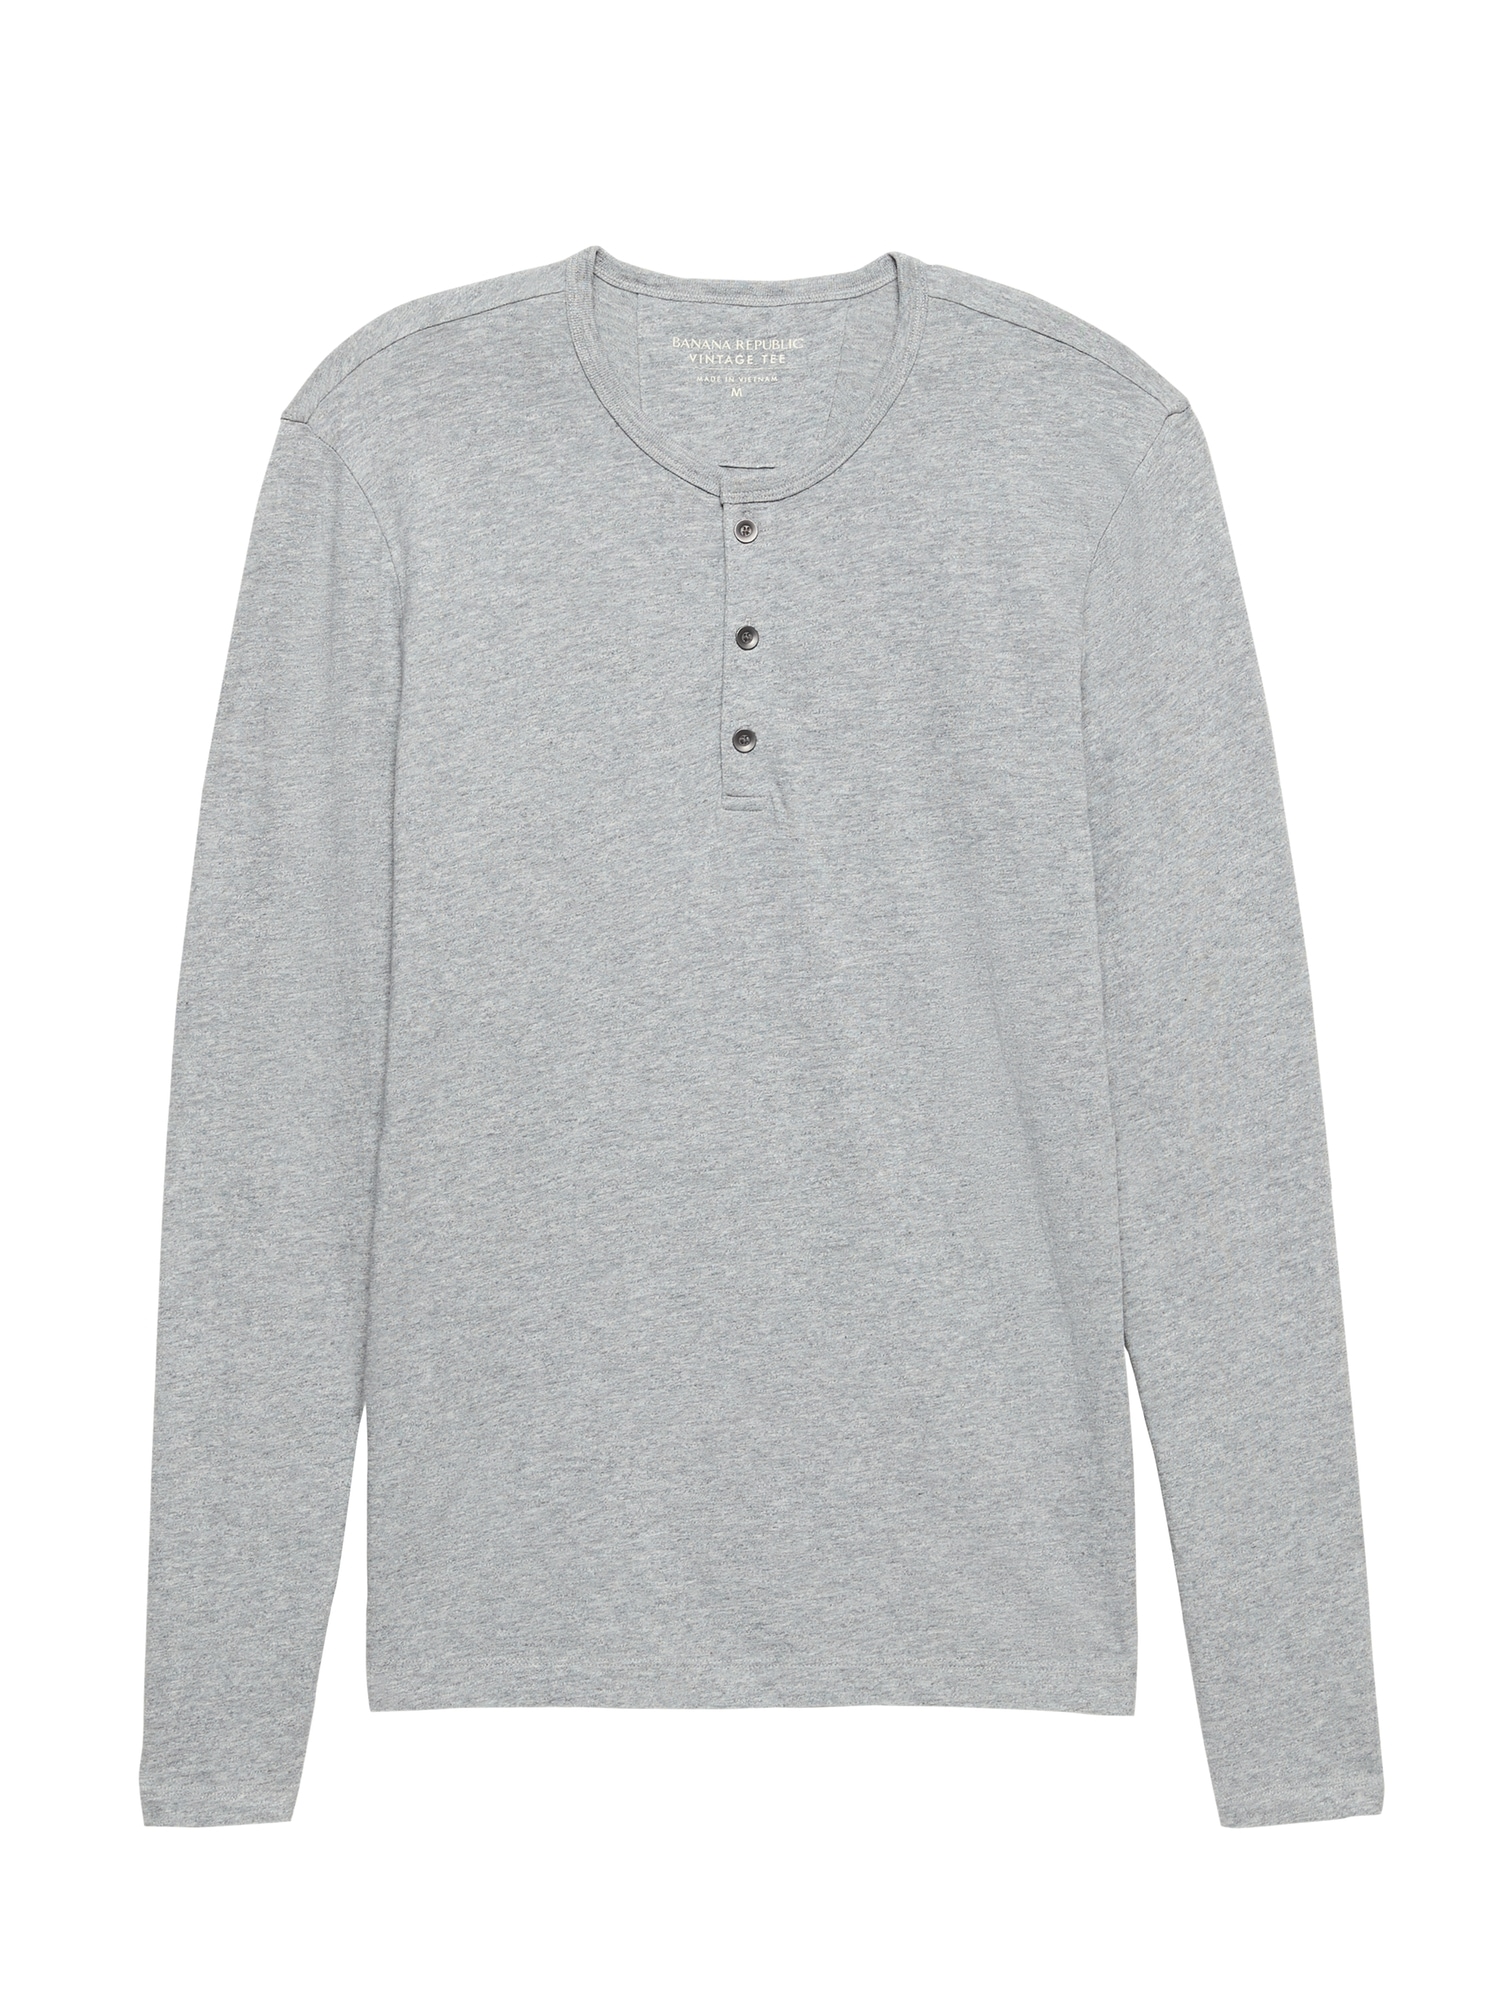 Vintage 100% Cotton Long-Sleeve Henley T-Shirt